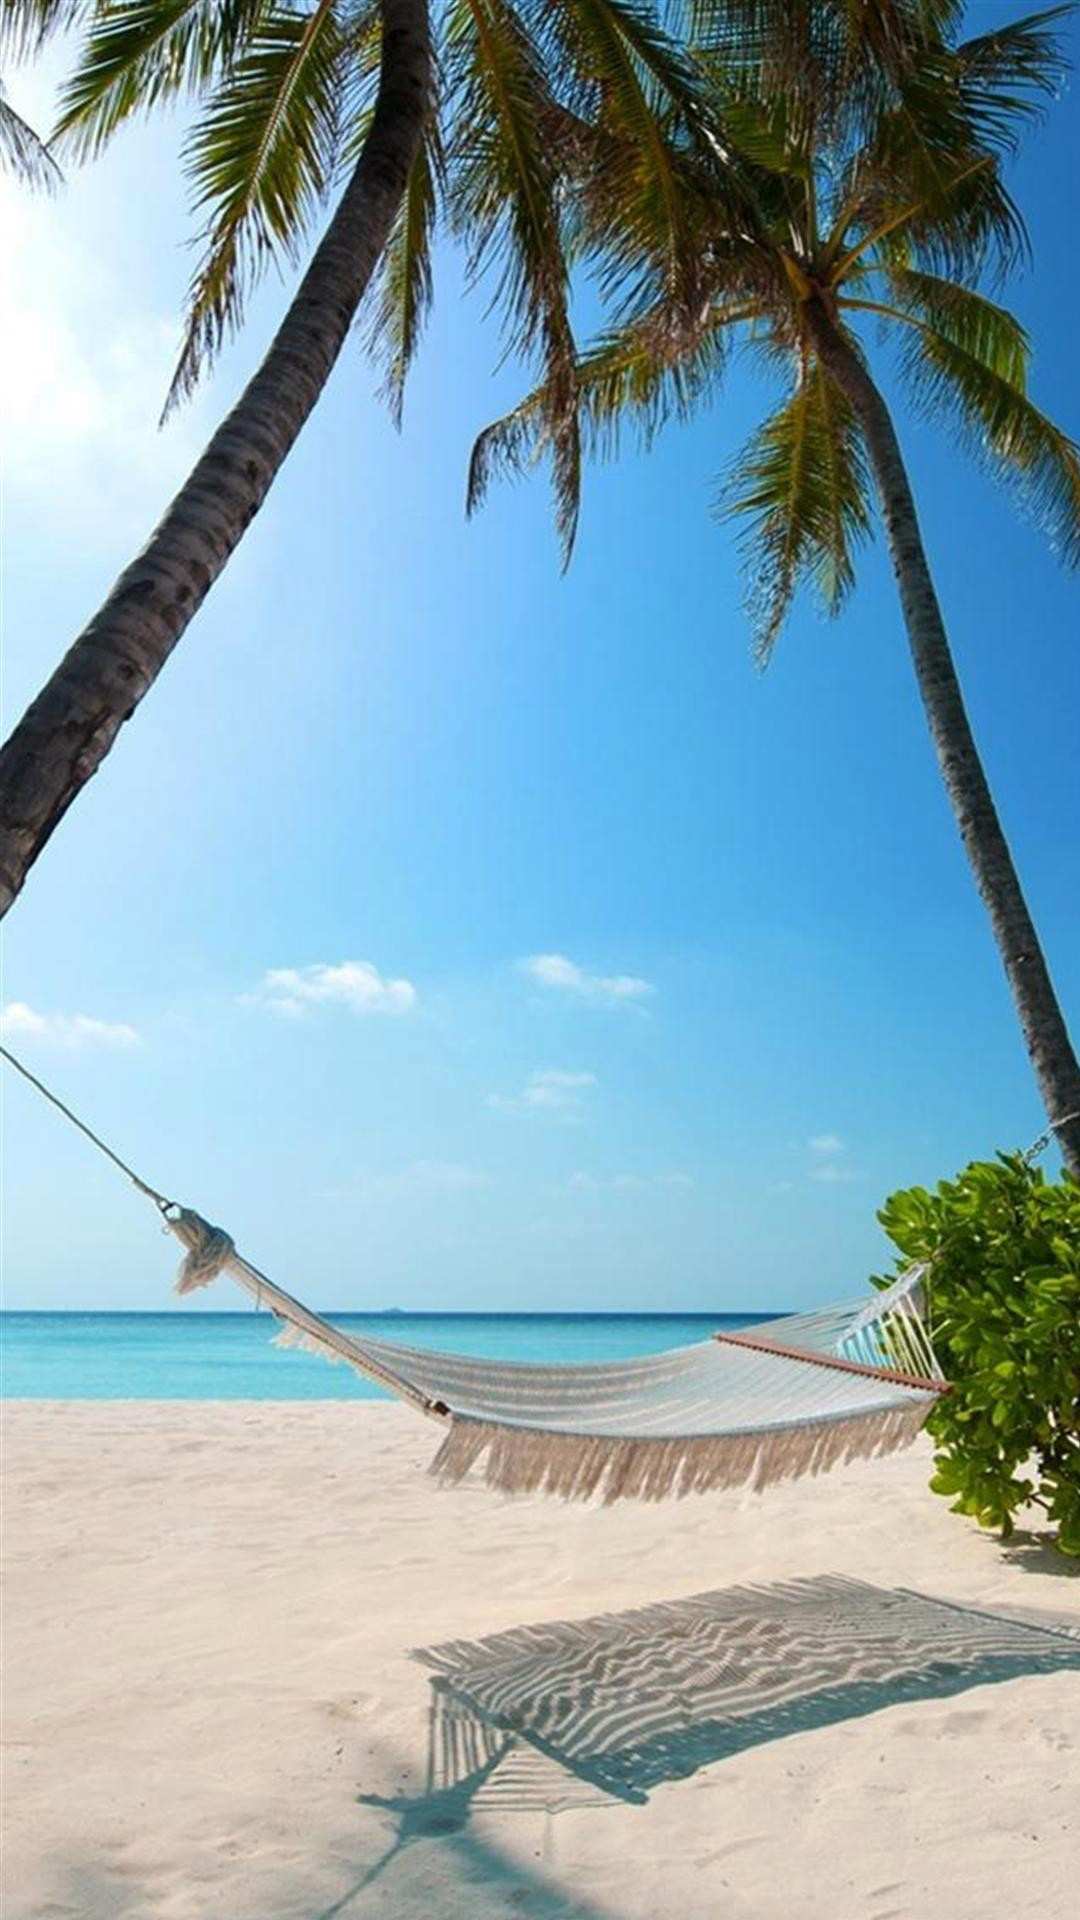 sfondi spiaggia iphone 6,amaca,caraibico,vacanza,palma,albero